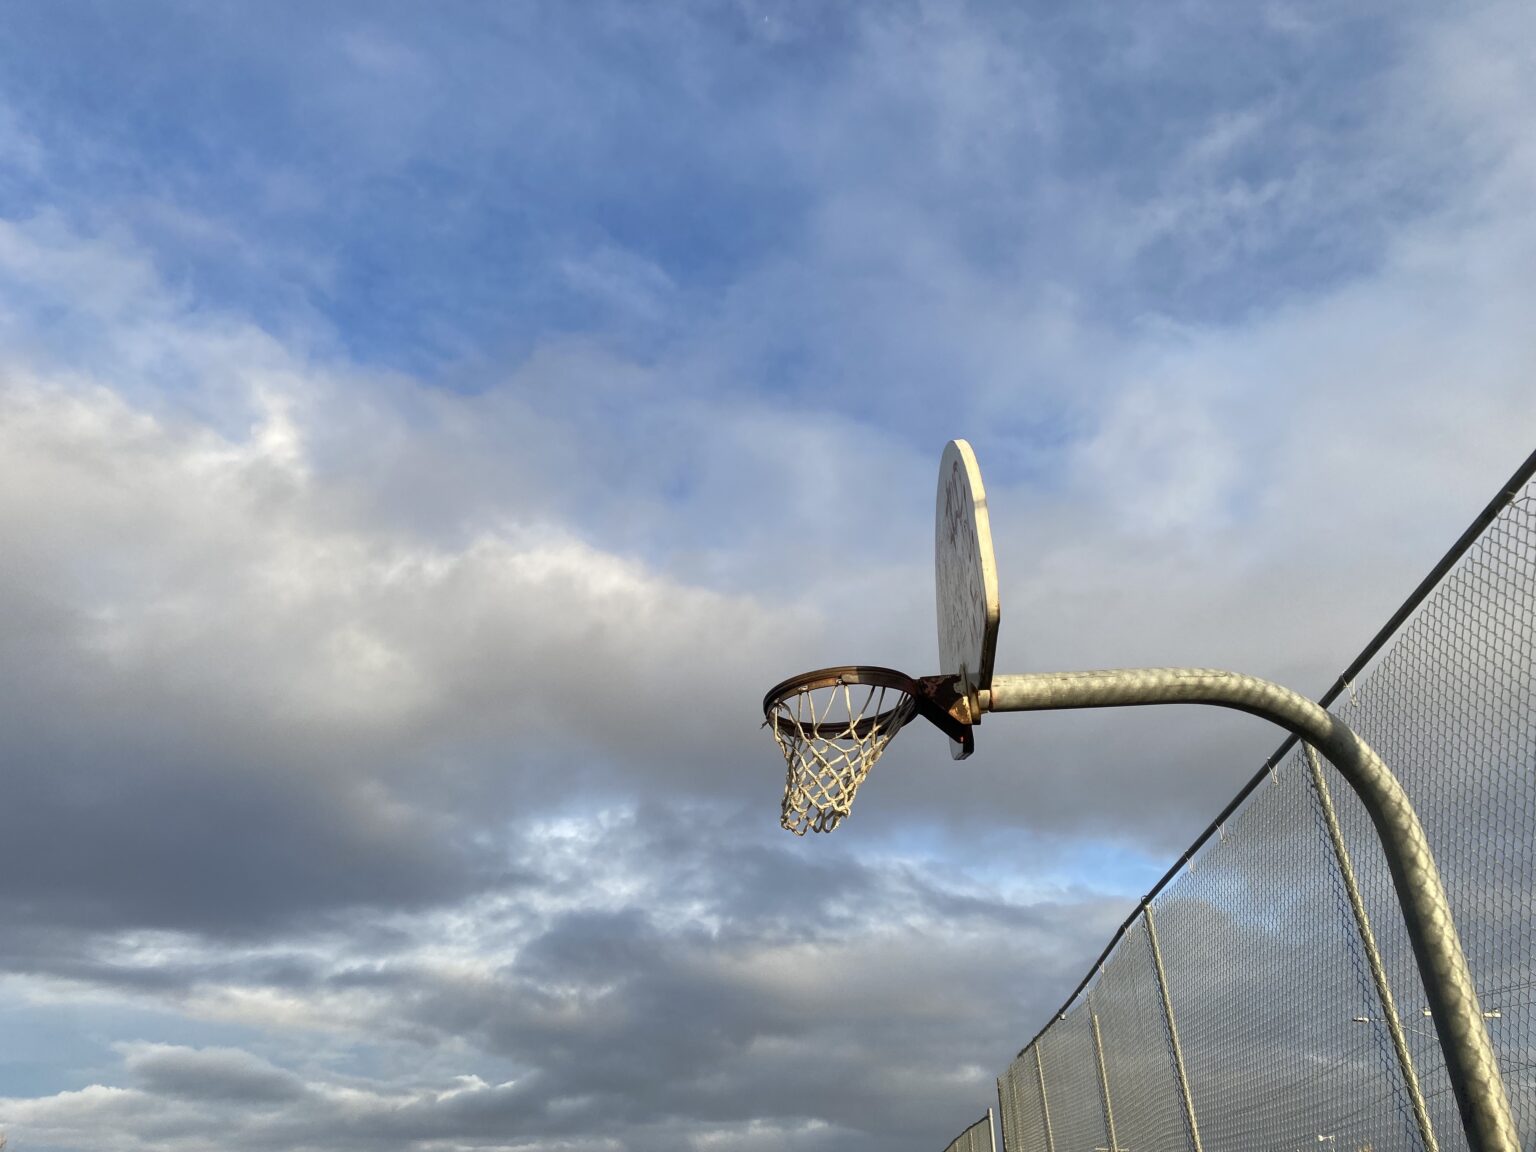 a basketball hoop